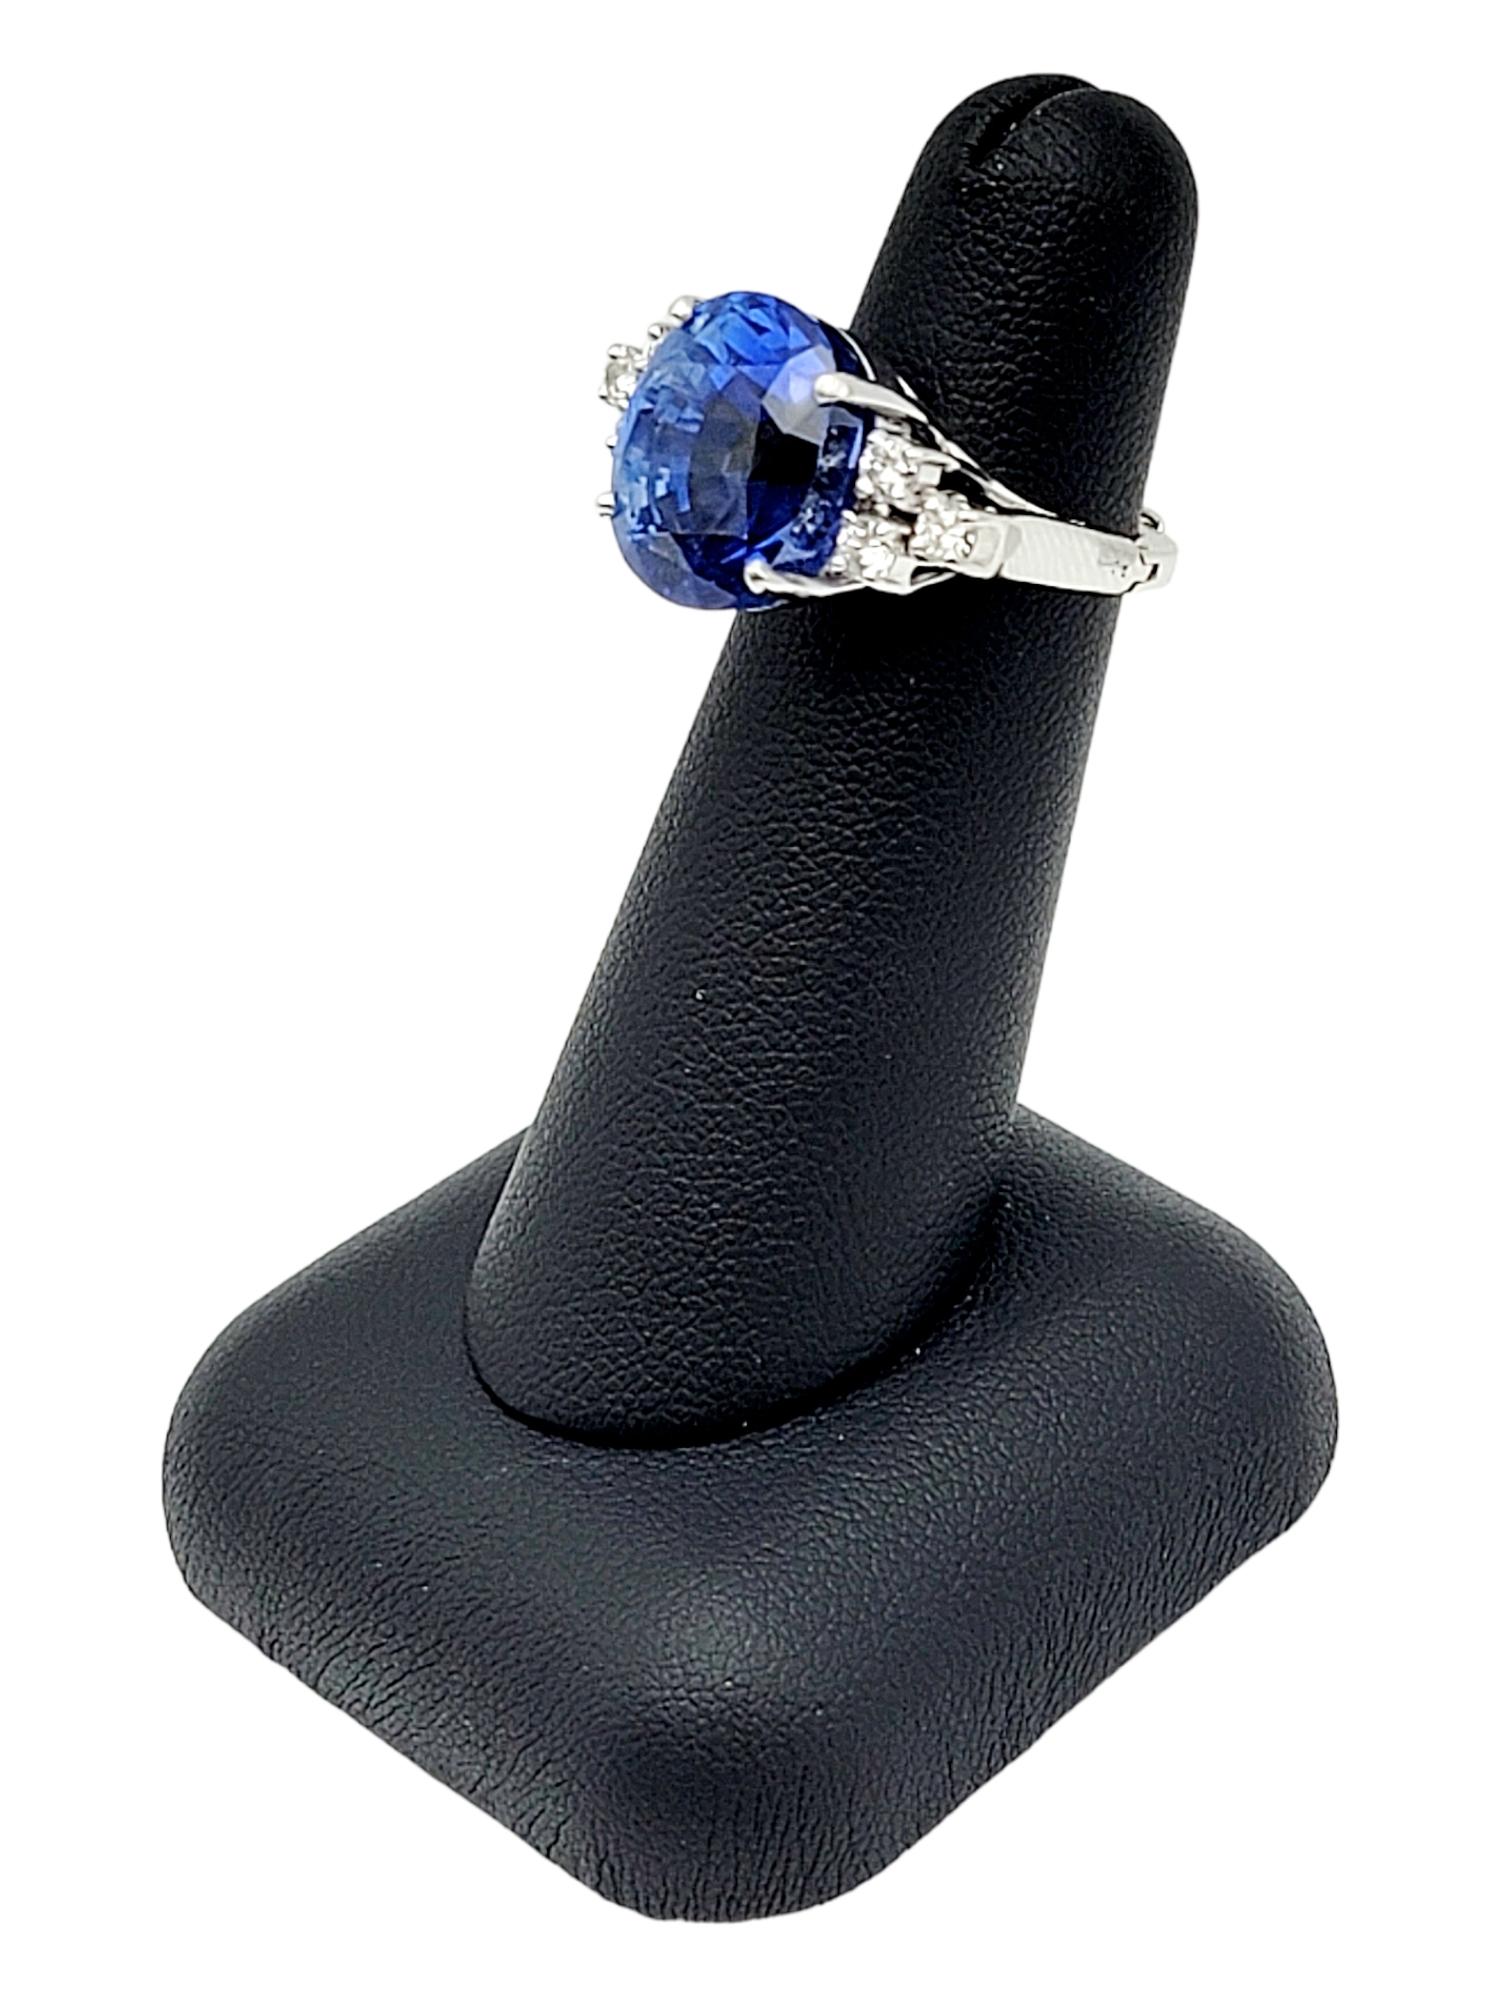 Impressive 15.35 Carat Rare Untreated Oval Ceylon Sapphire and Diamond Ring For Sale 9